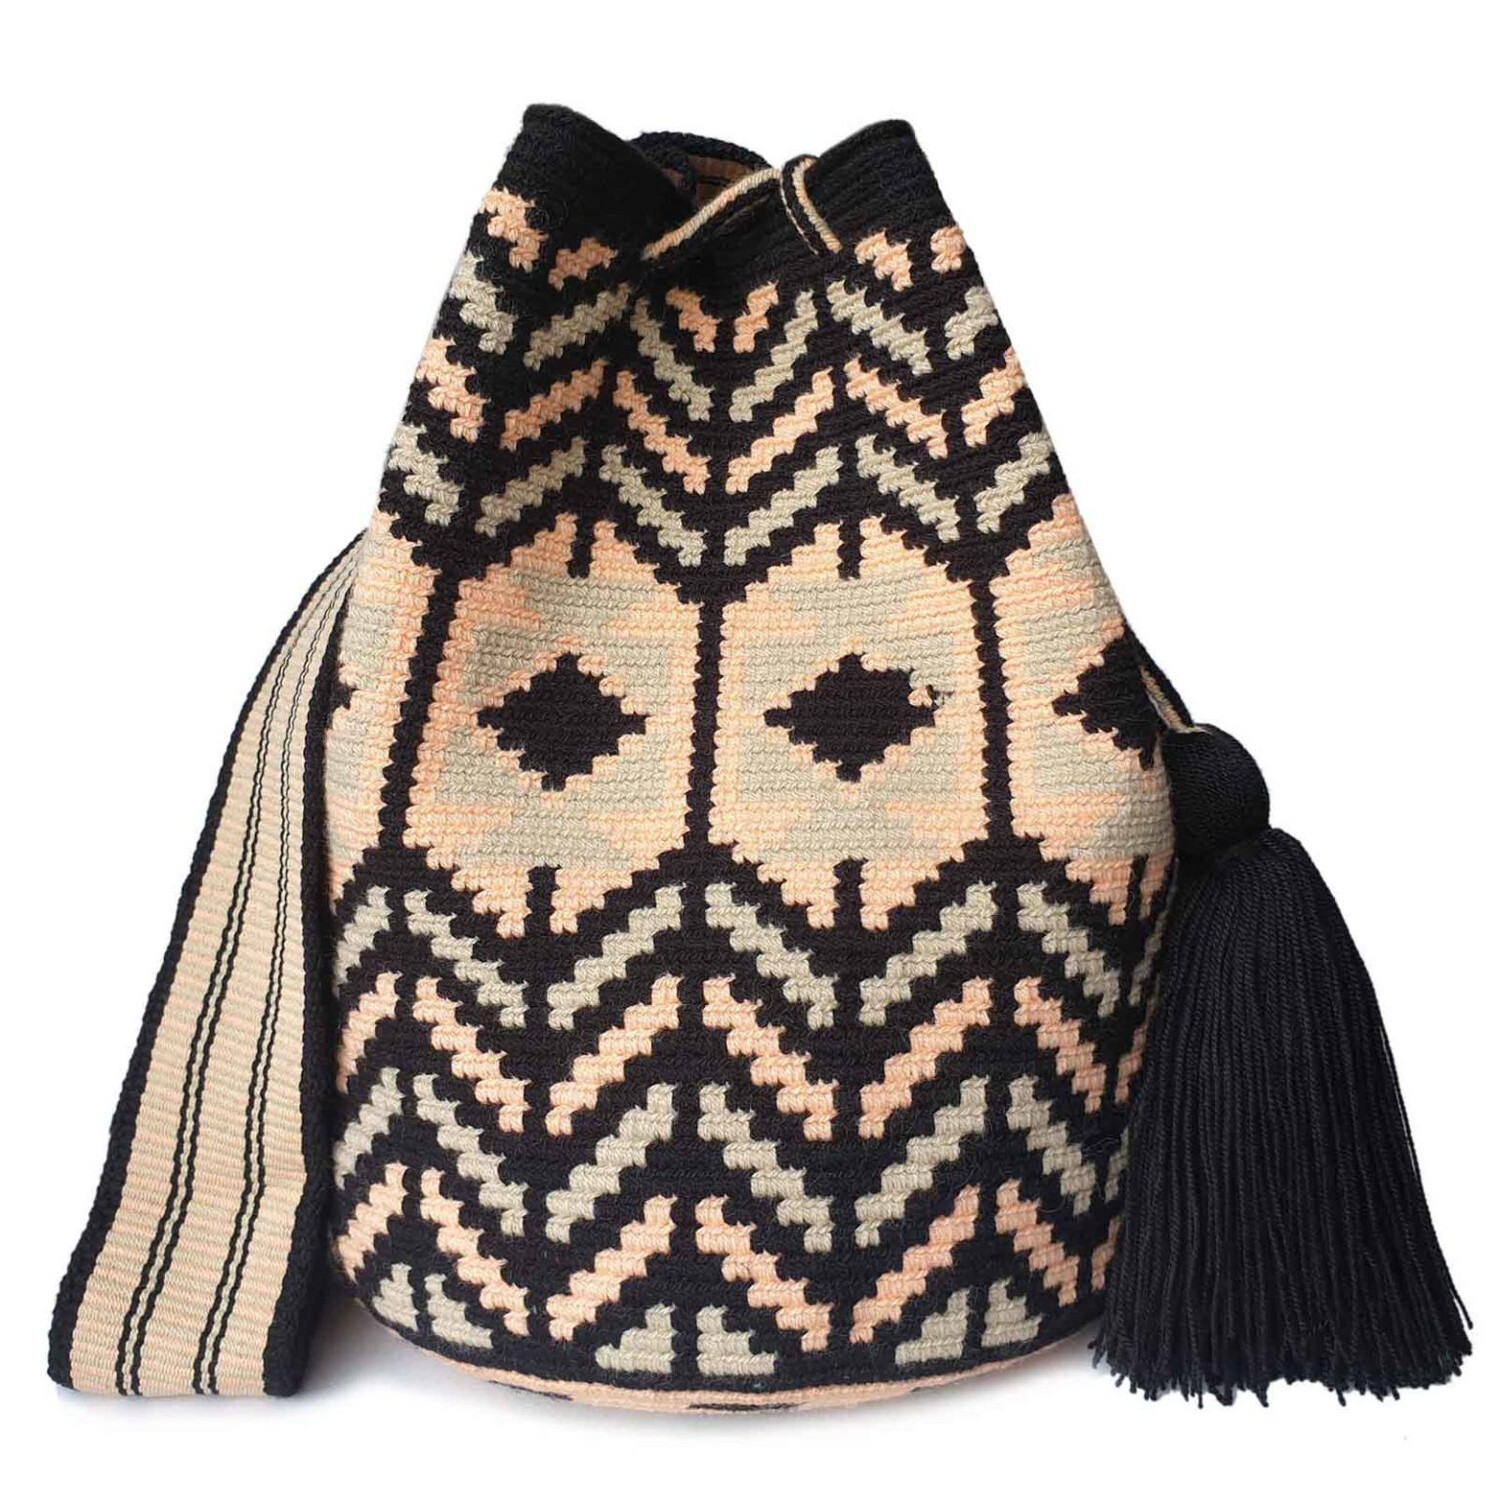 Lombia, Fluida Wayuu Crochet Bag